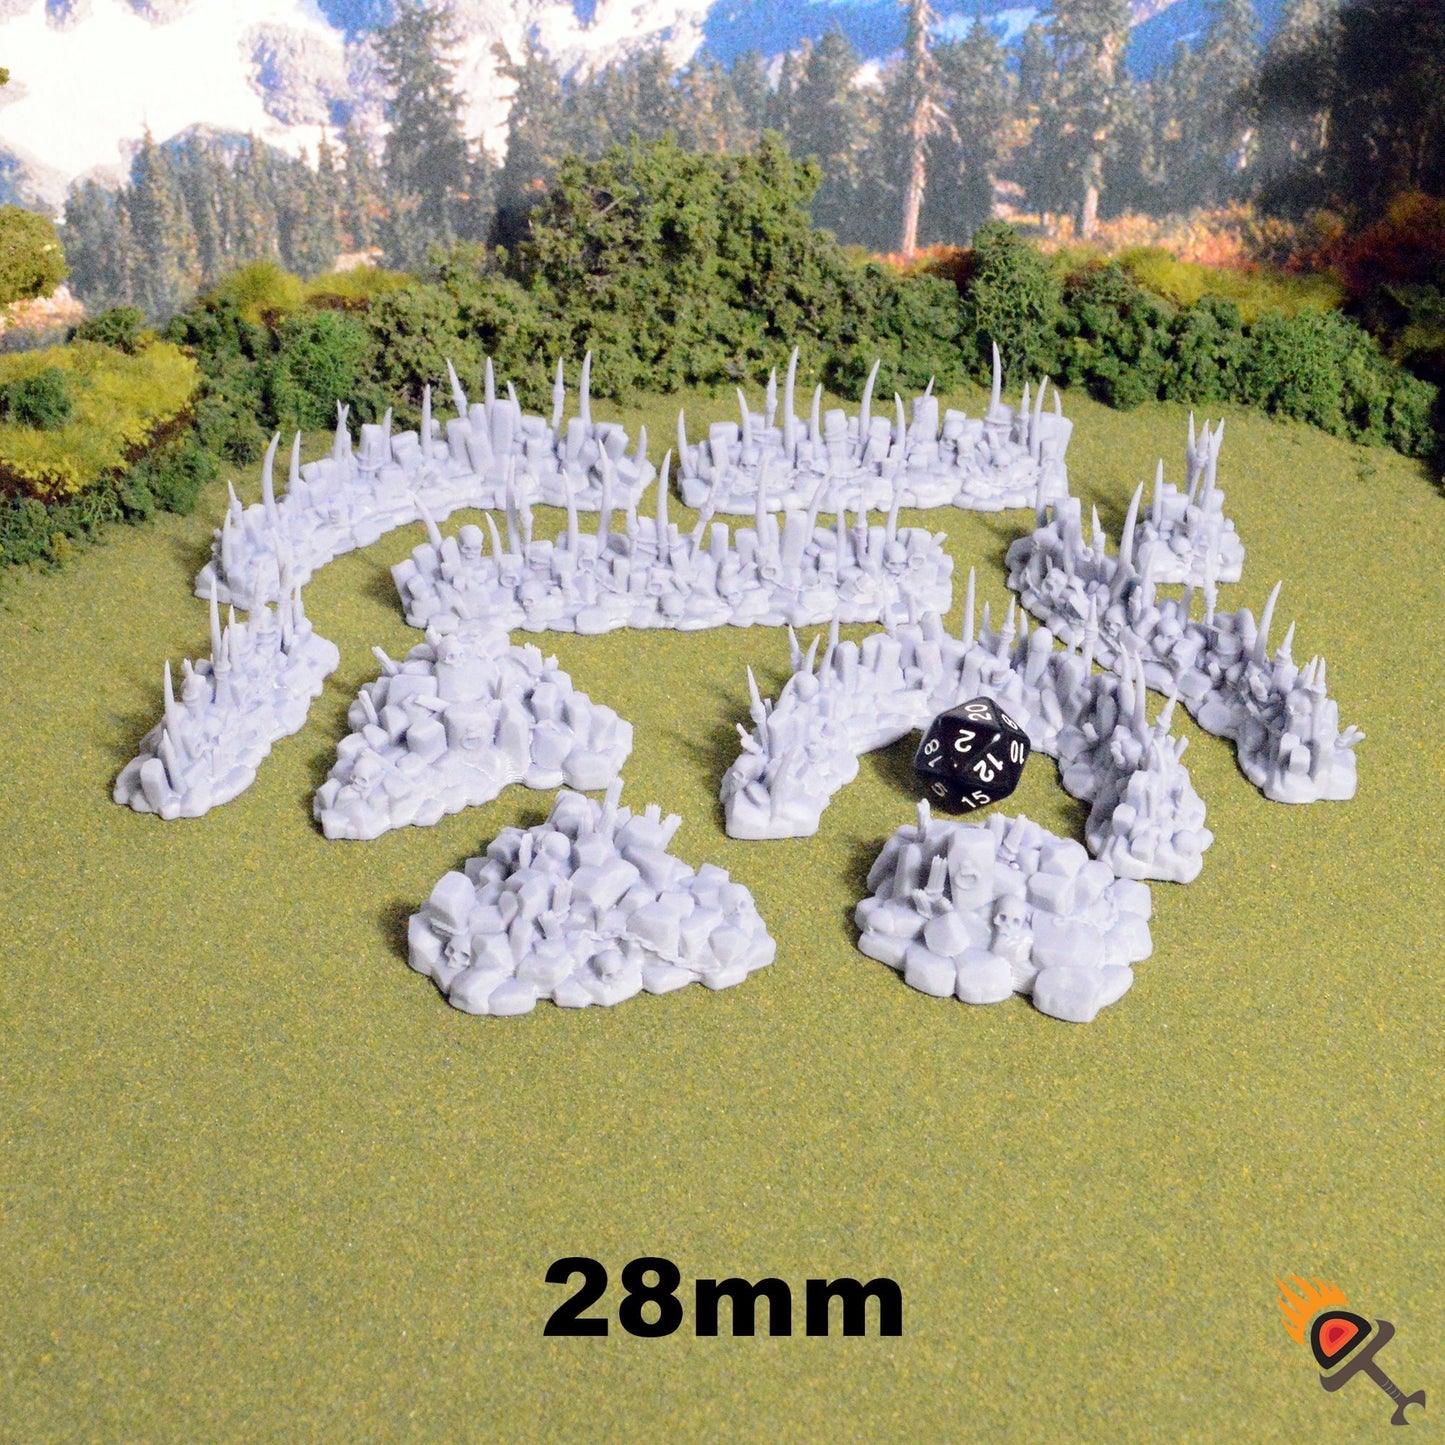 Goblin Barricades and Rubble 28mm for D&D Terrain, DnD Pathfinder Warhammer 40k Tribal Defense Walls